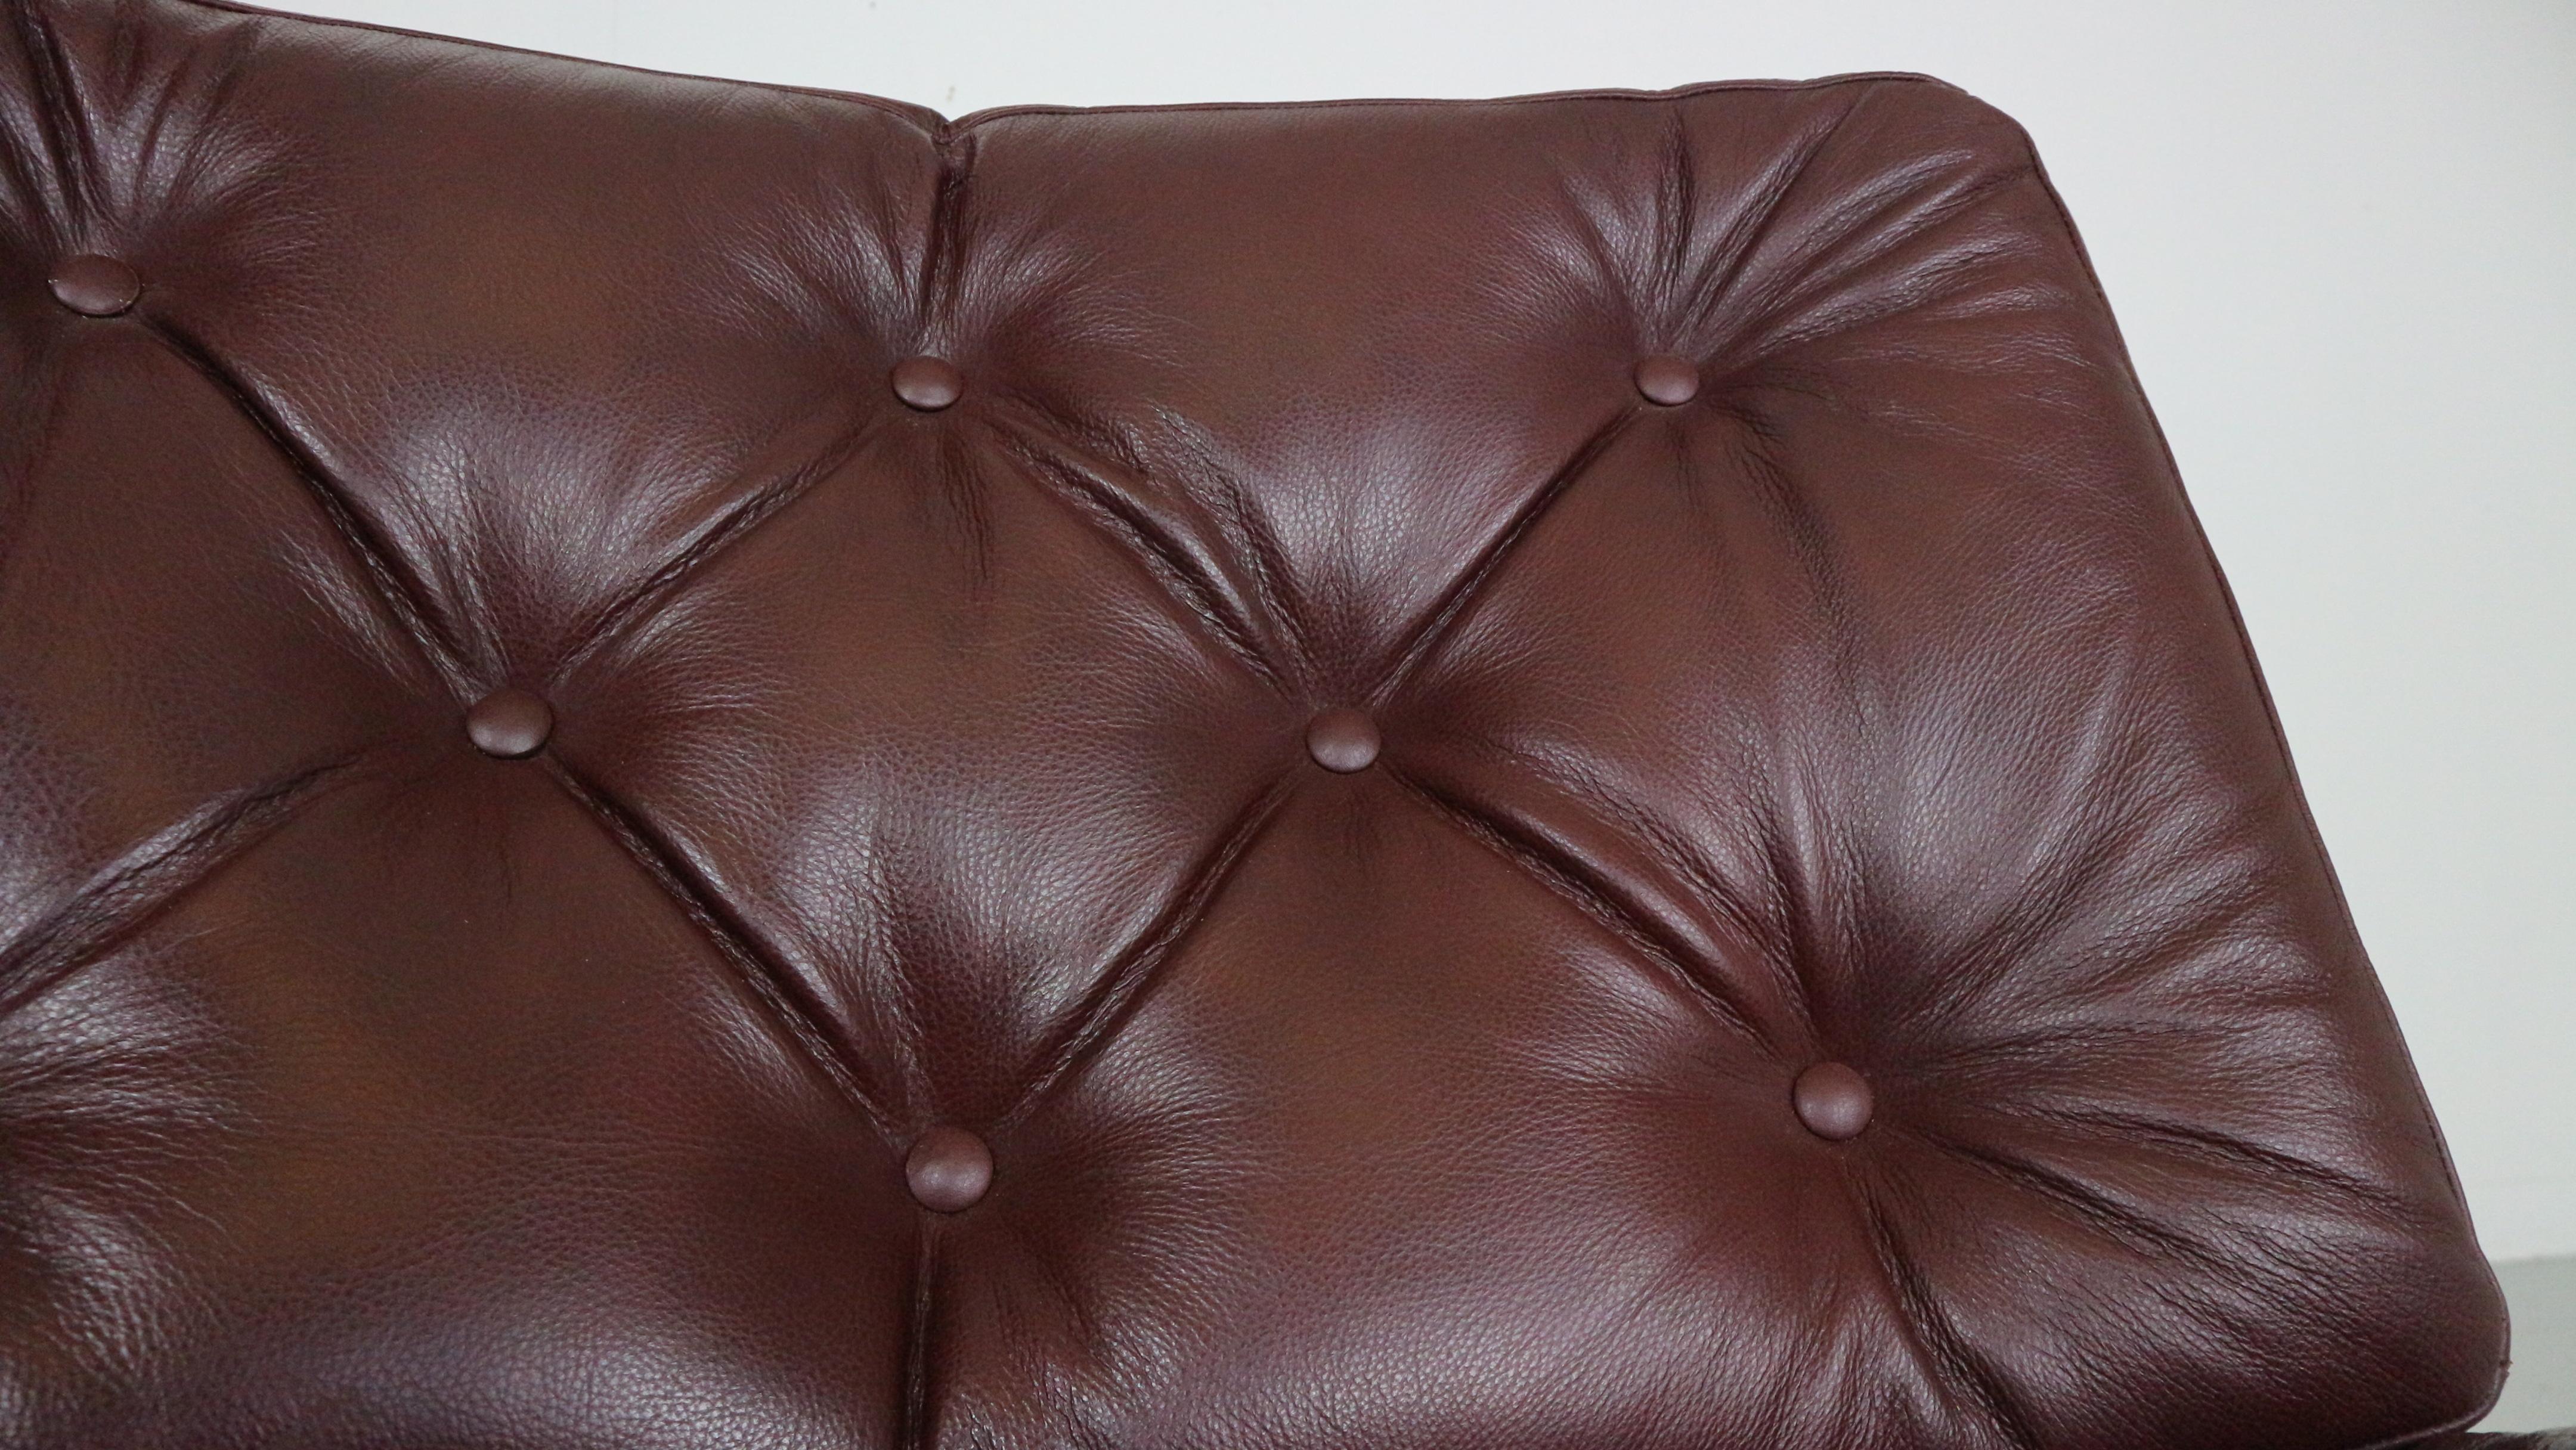 Geoffrey Harcourt Swivel Leather Lounge Chair- 